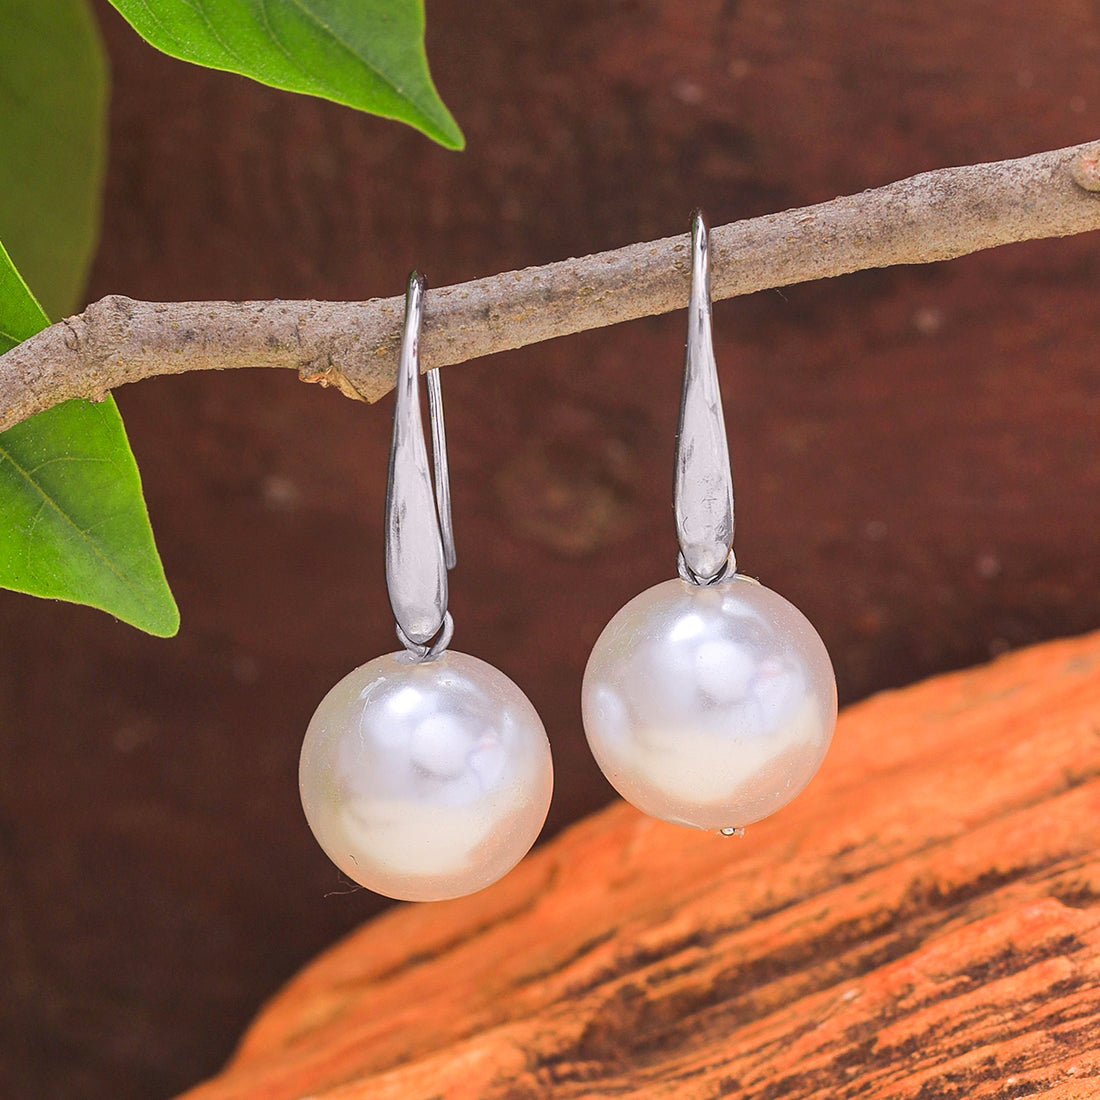 Minimalist Silver Earrings Featuring A Striking, Large Pearl.